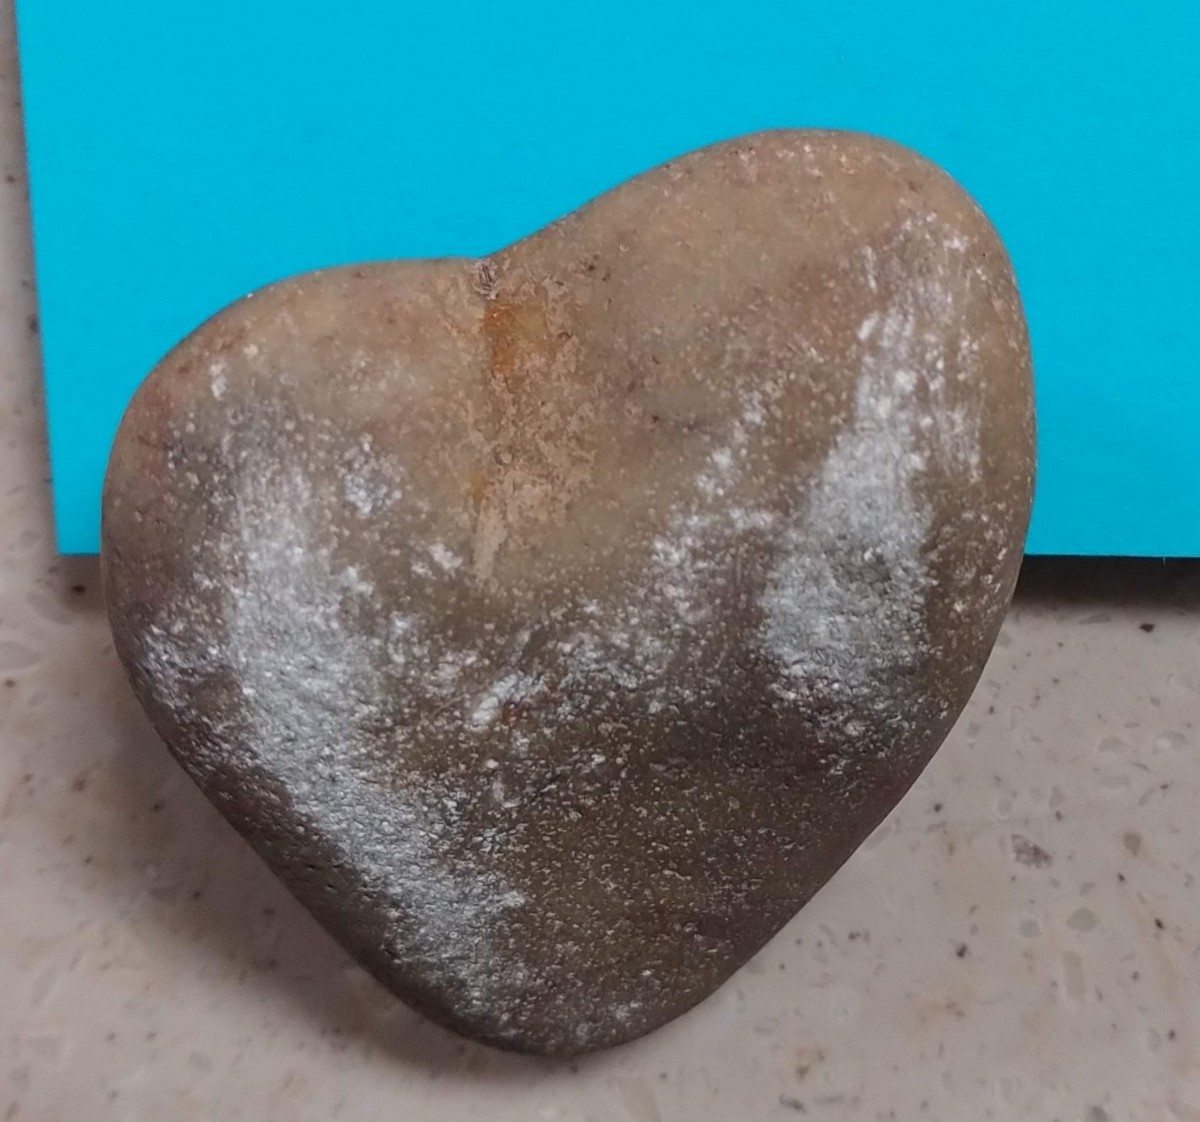 A heart shaped rock